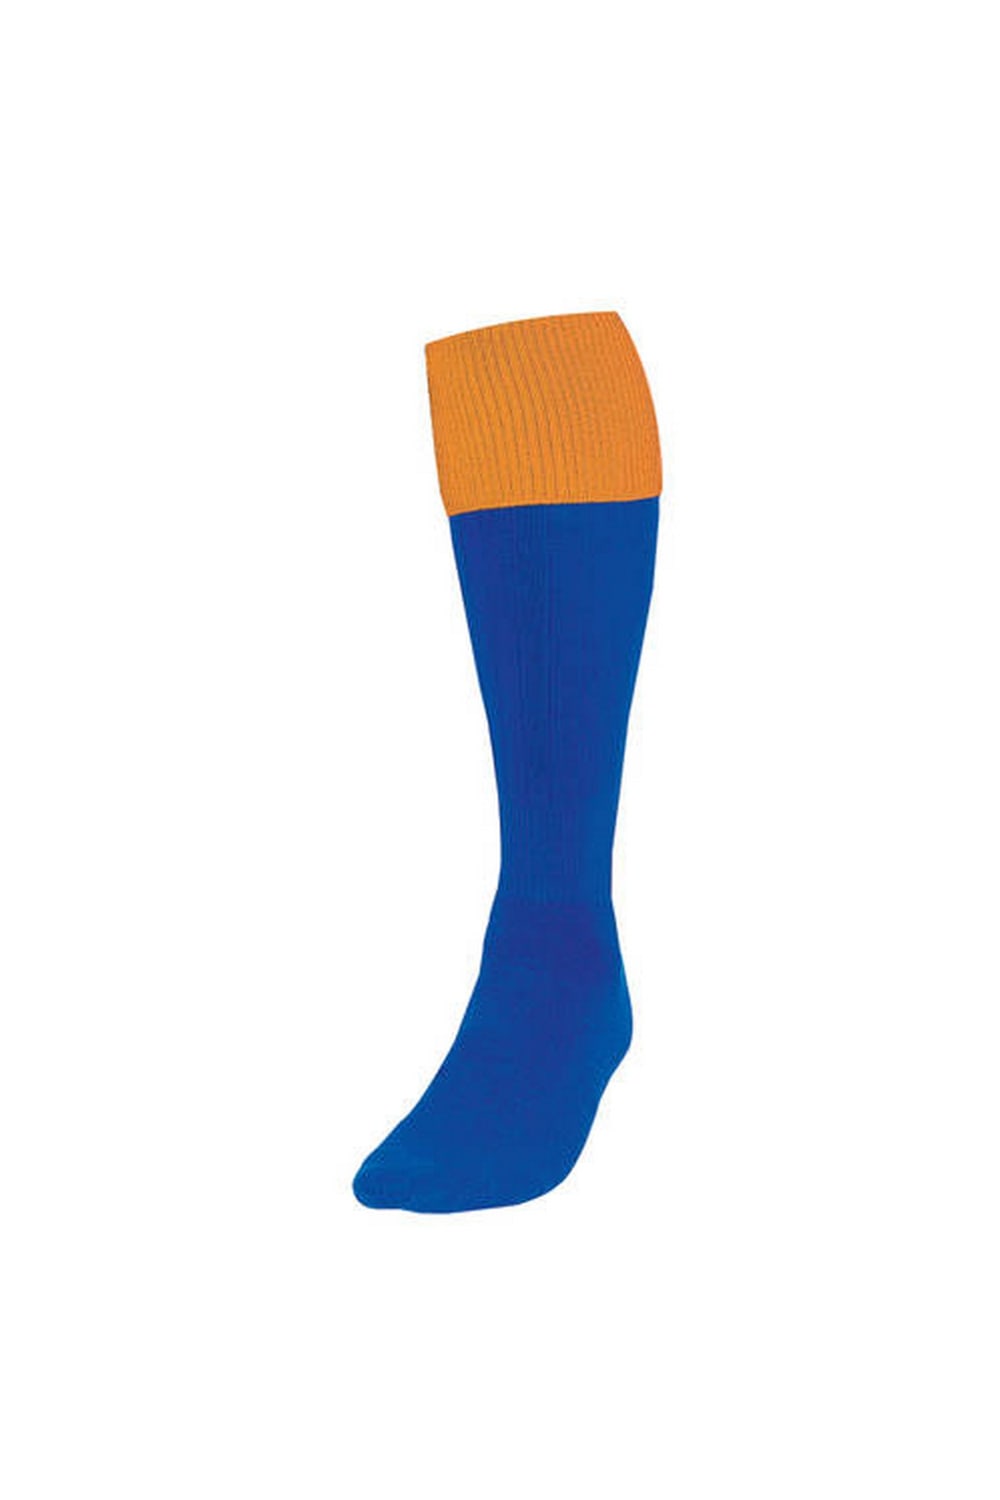 Precision Unisex Adult Turnover Football Socks (Royal Blue/Amber Glow)